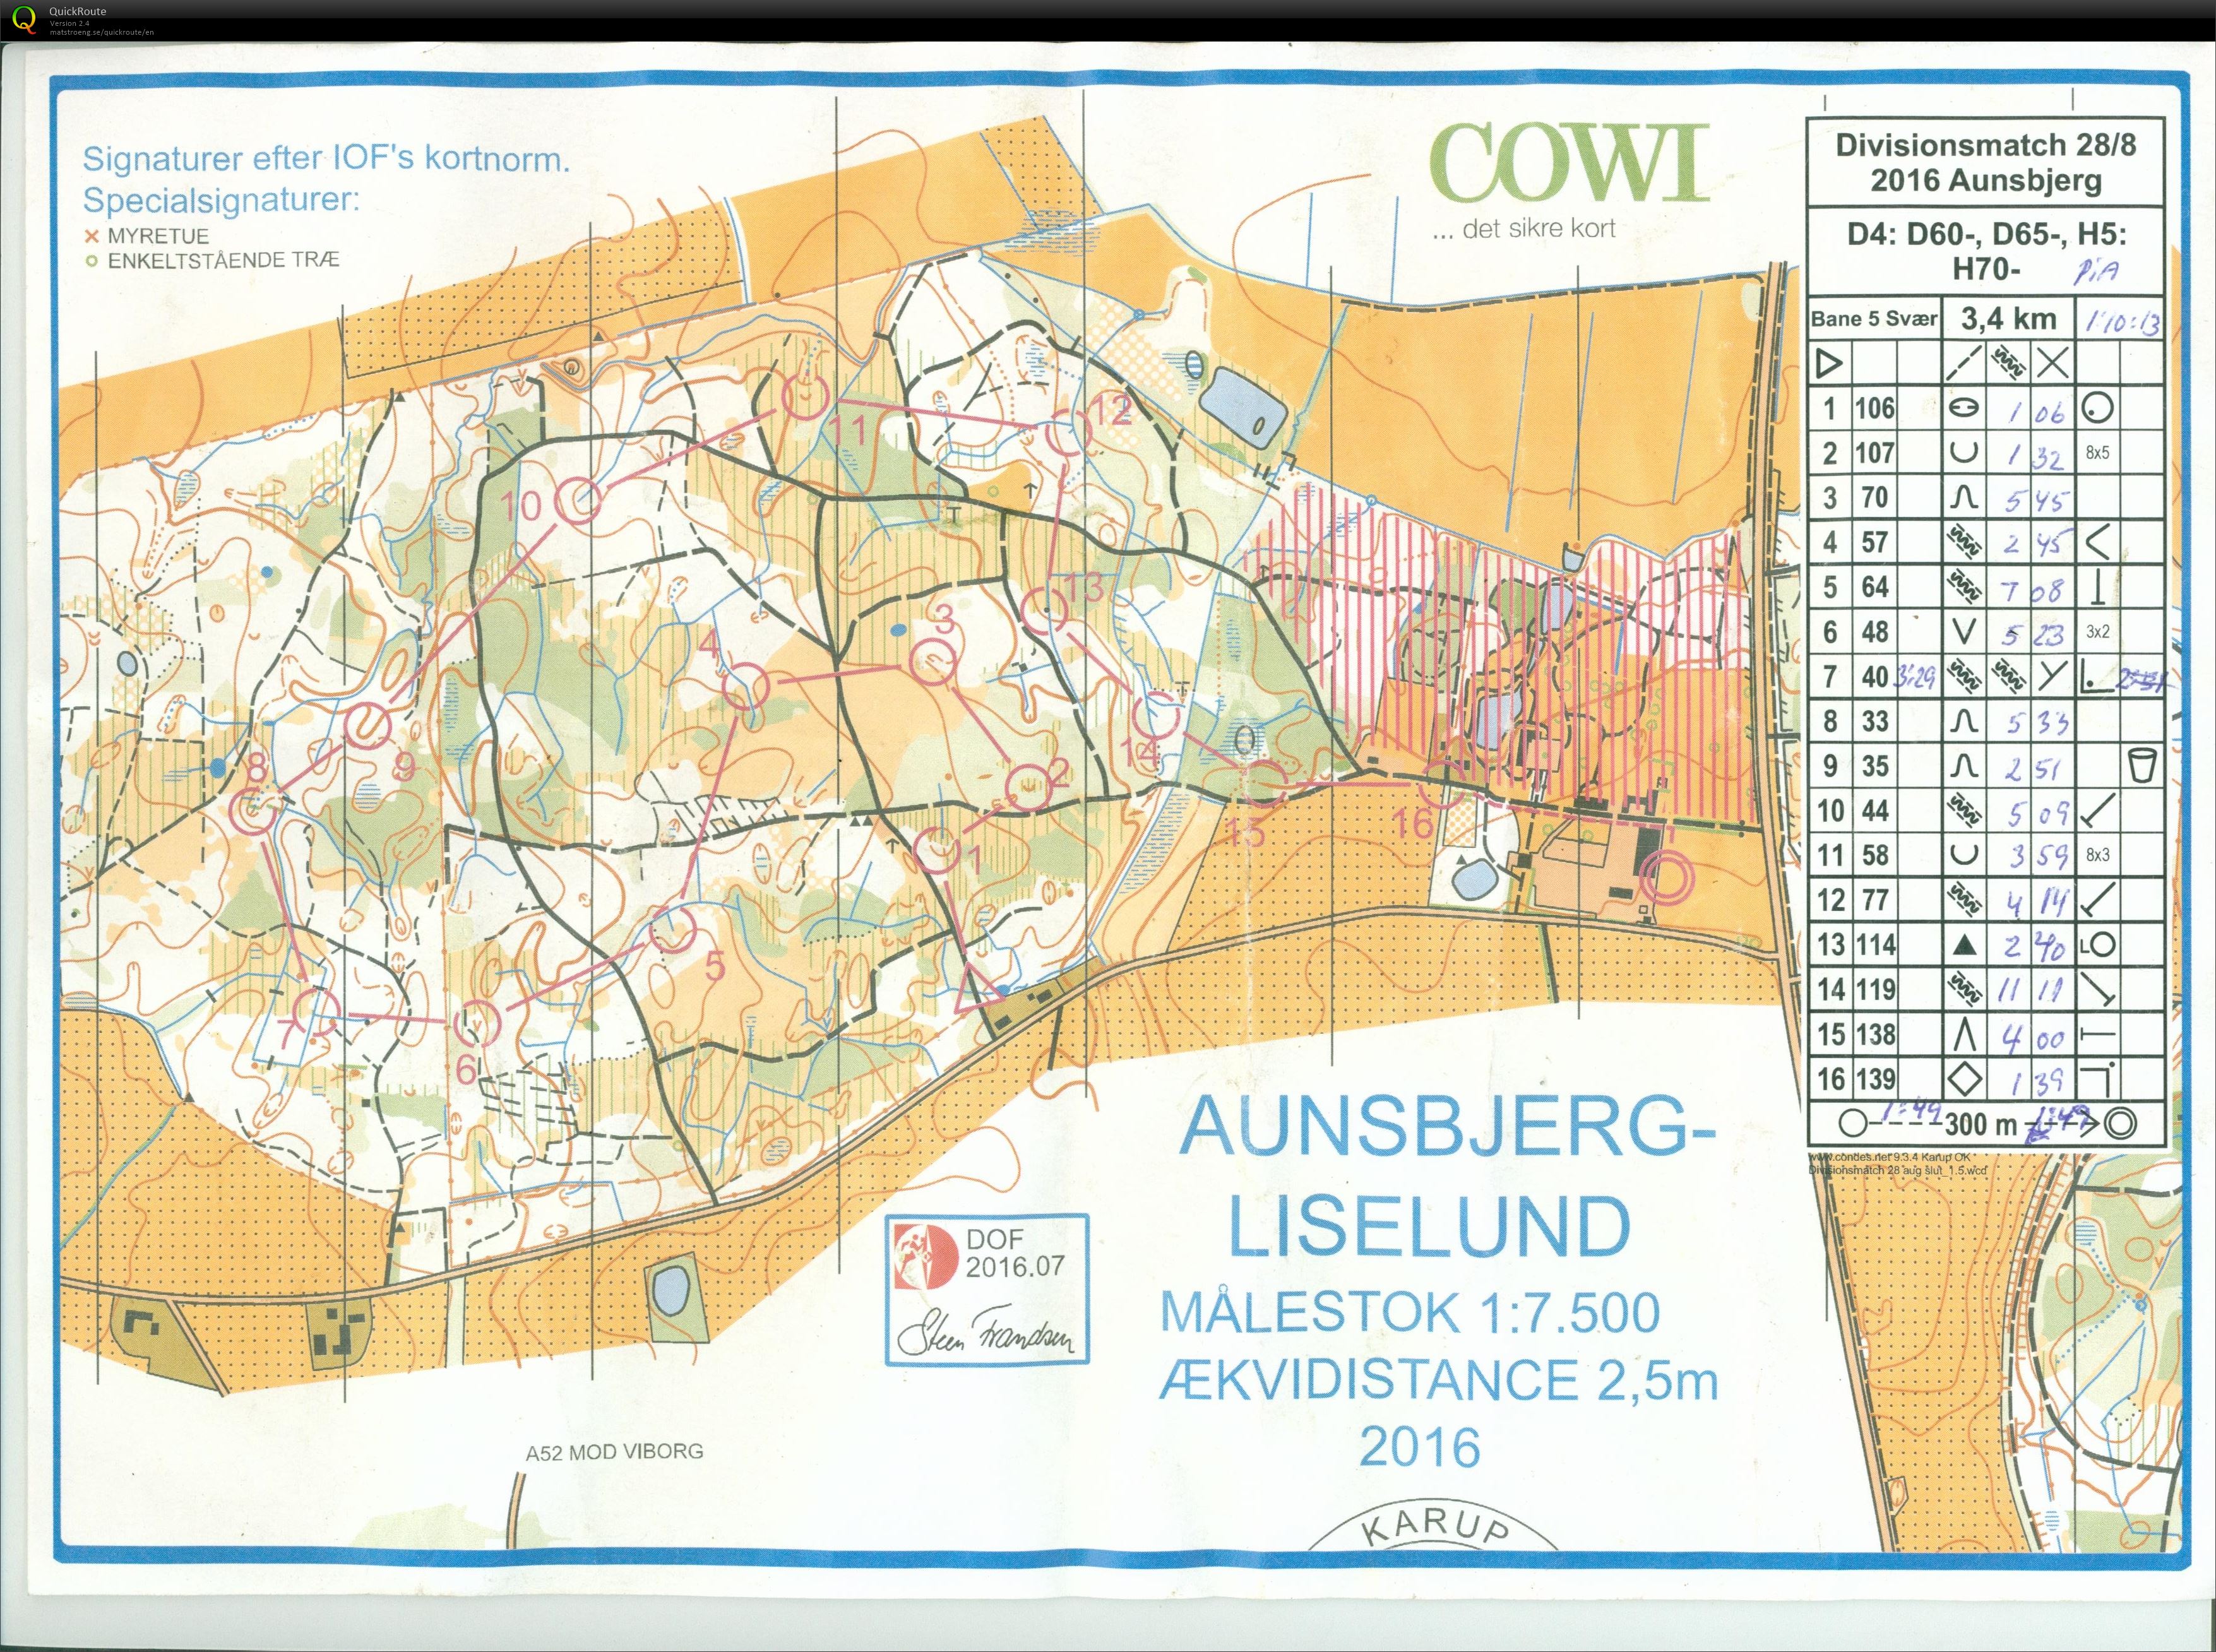 Aunsbjerg Liselund, D4, D60, Bane 5, Pia Gade, 28081 (28-08-2016)